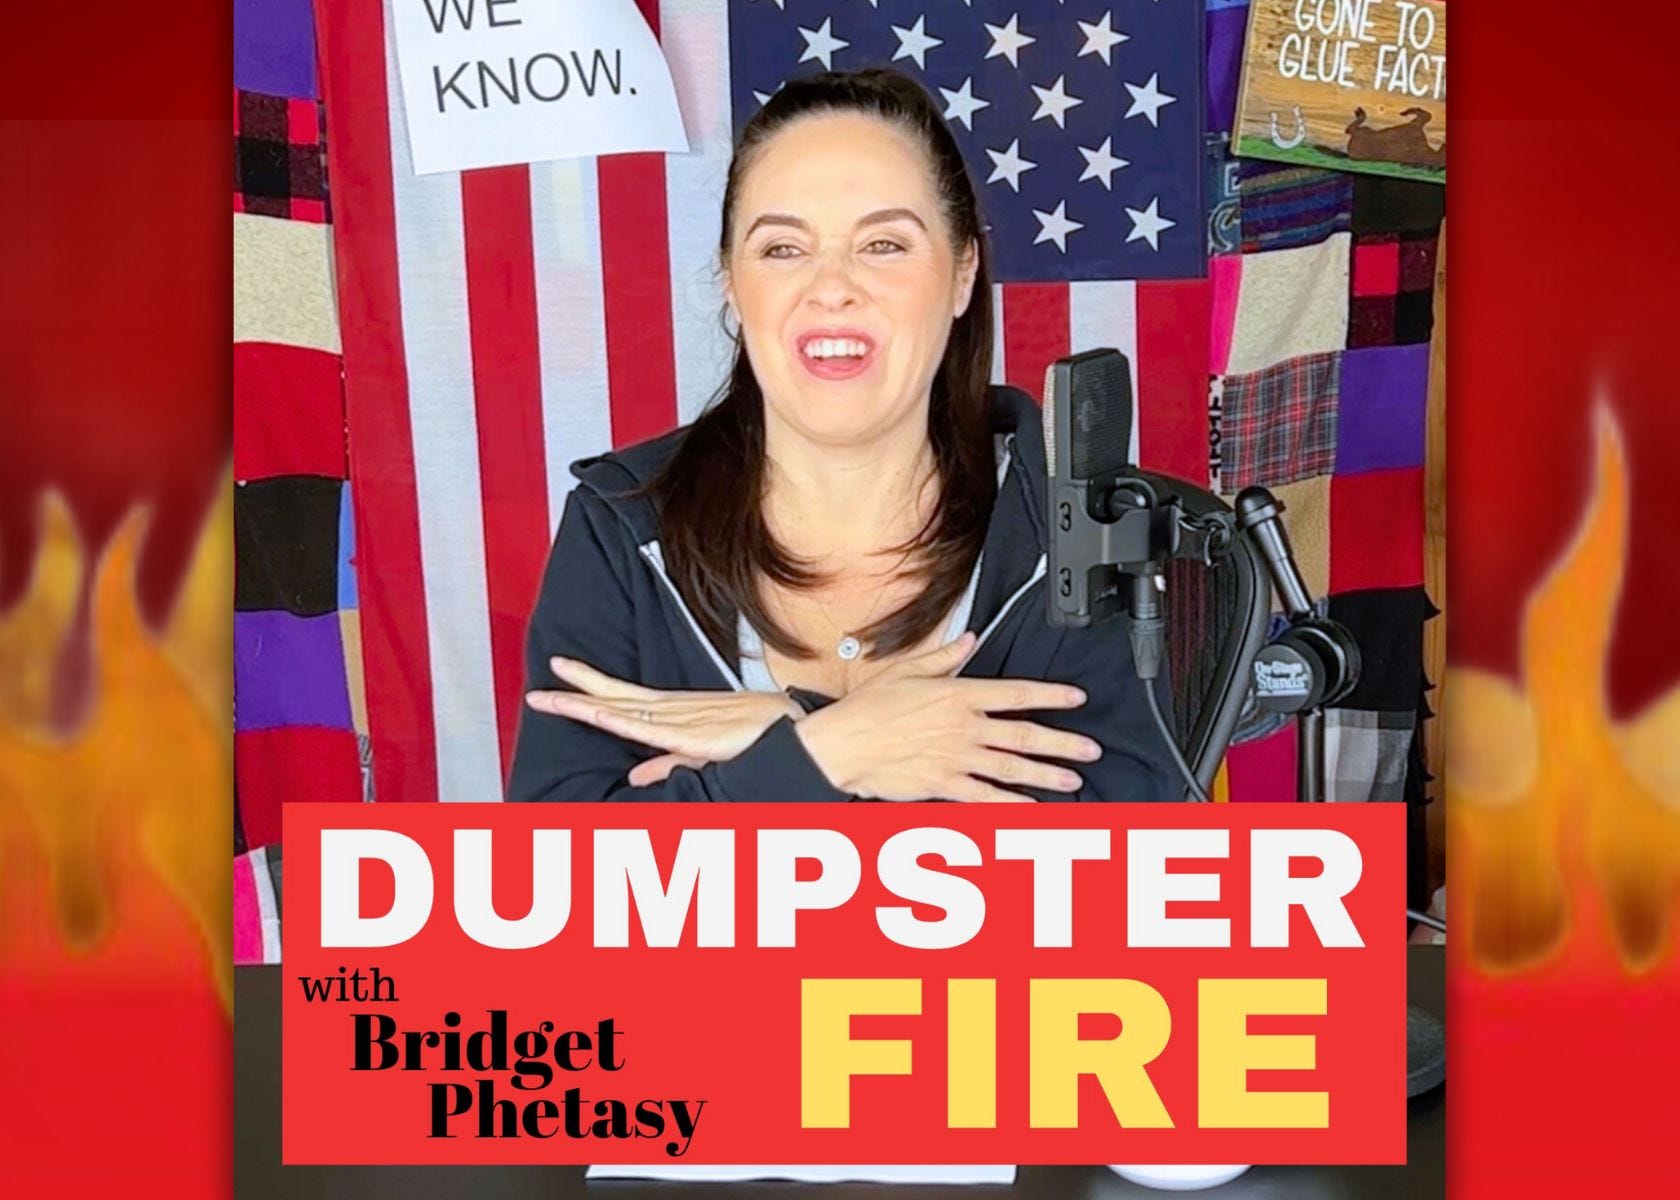 Dumpster Fire 104 - Make Shame Great Again